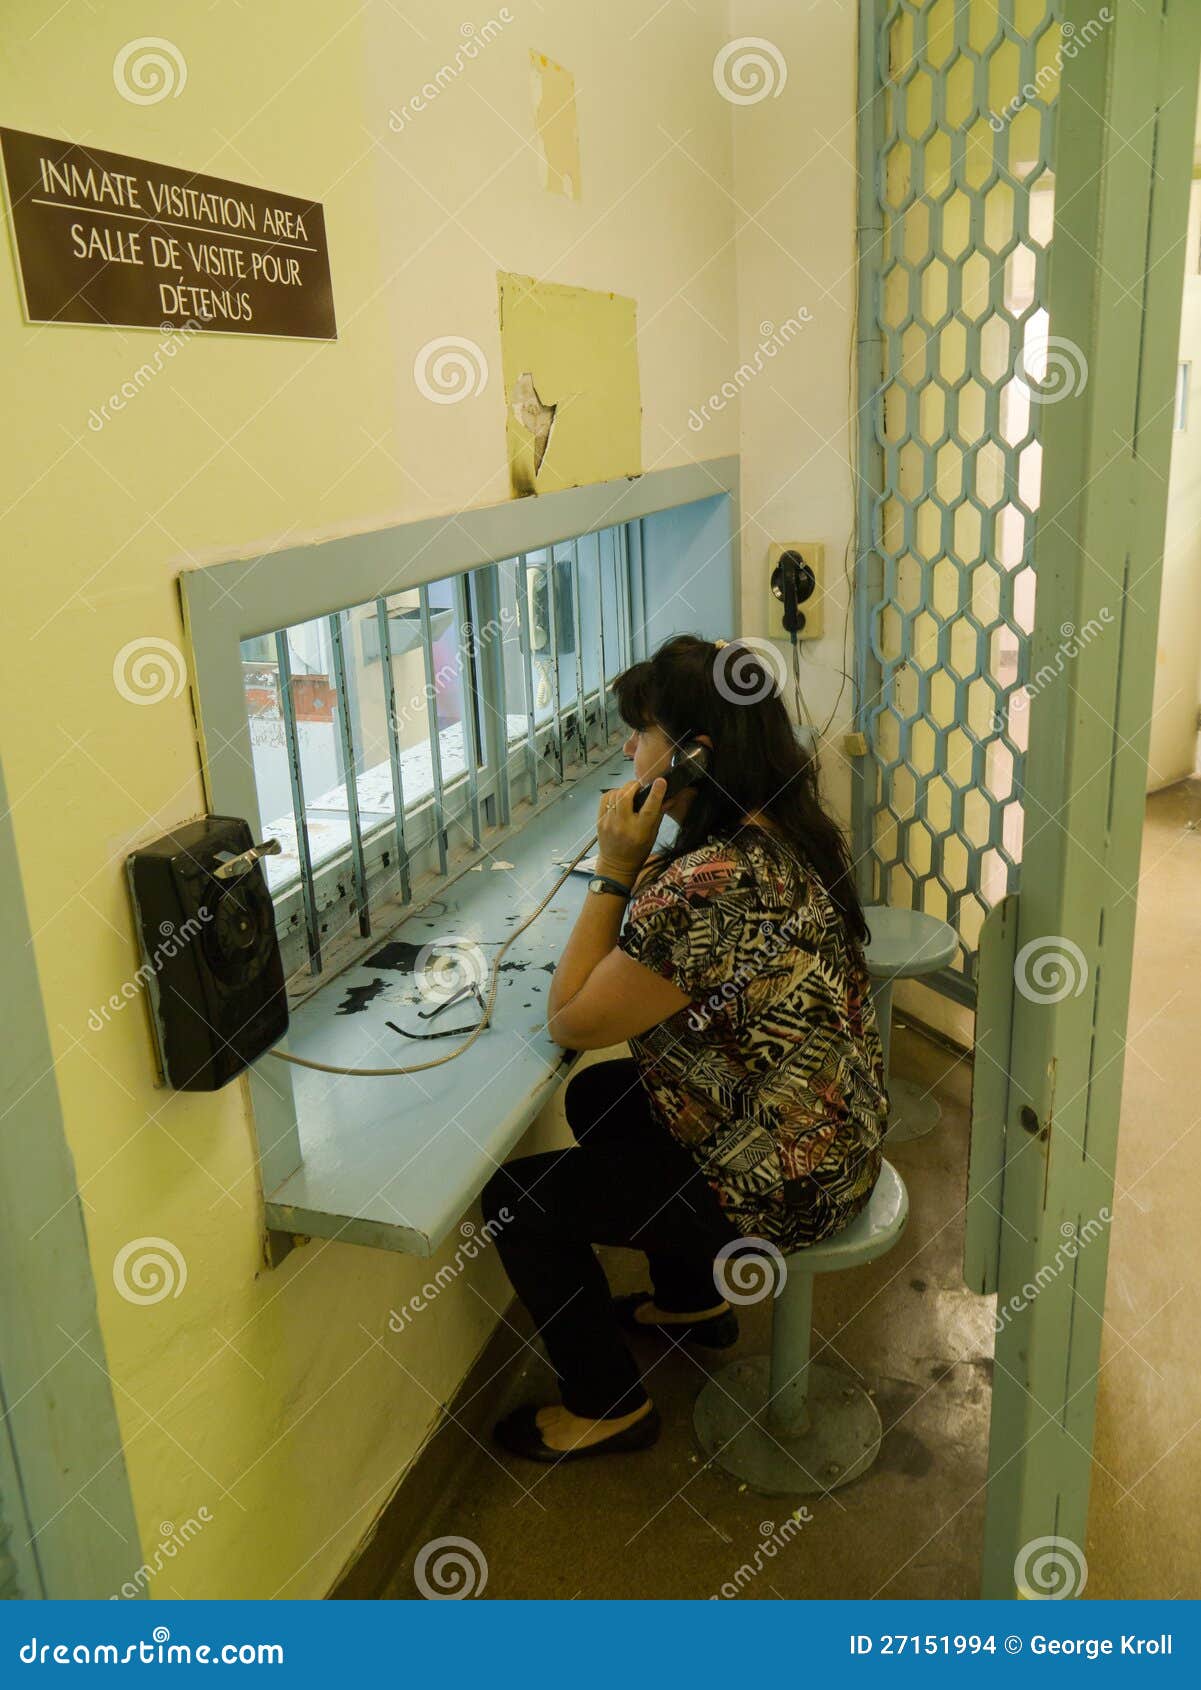 woman at jail prison visit area